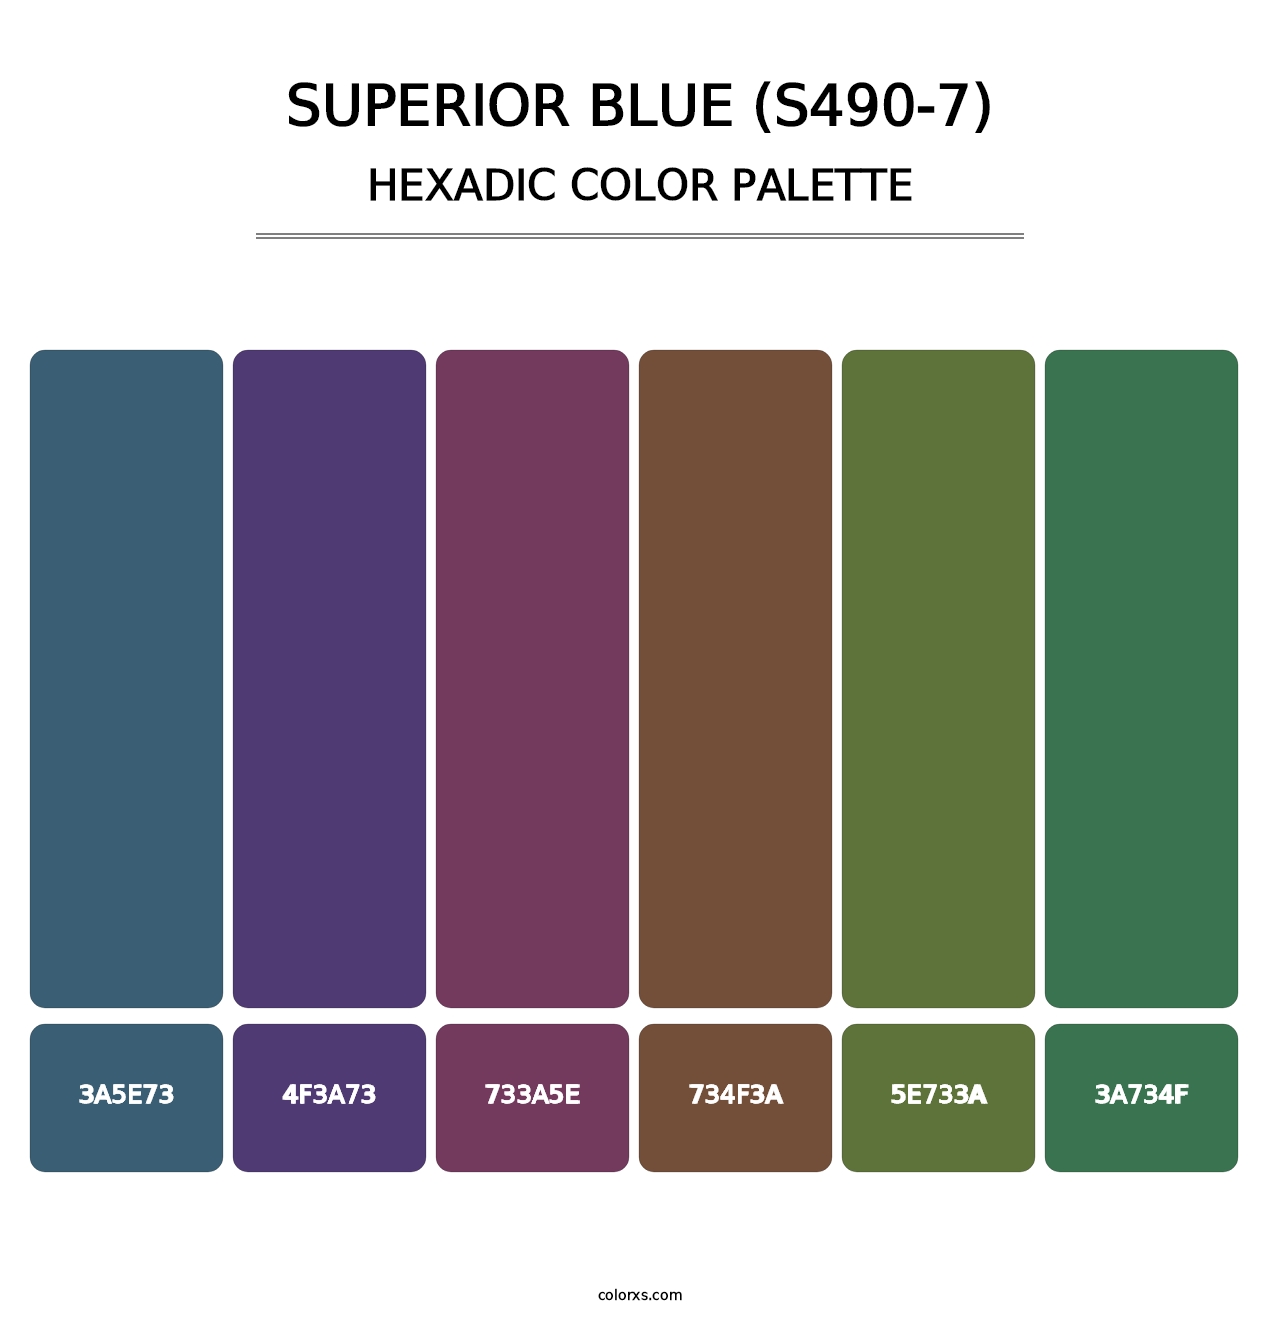 Superior Blue (S490-7) - Hexadic Color Palette